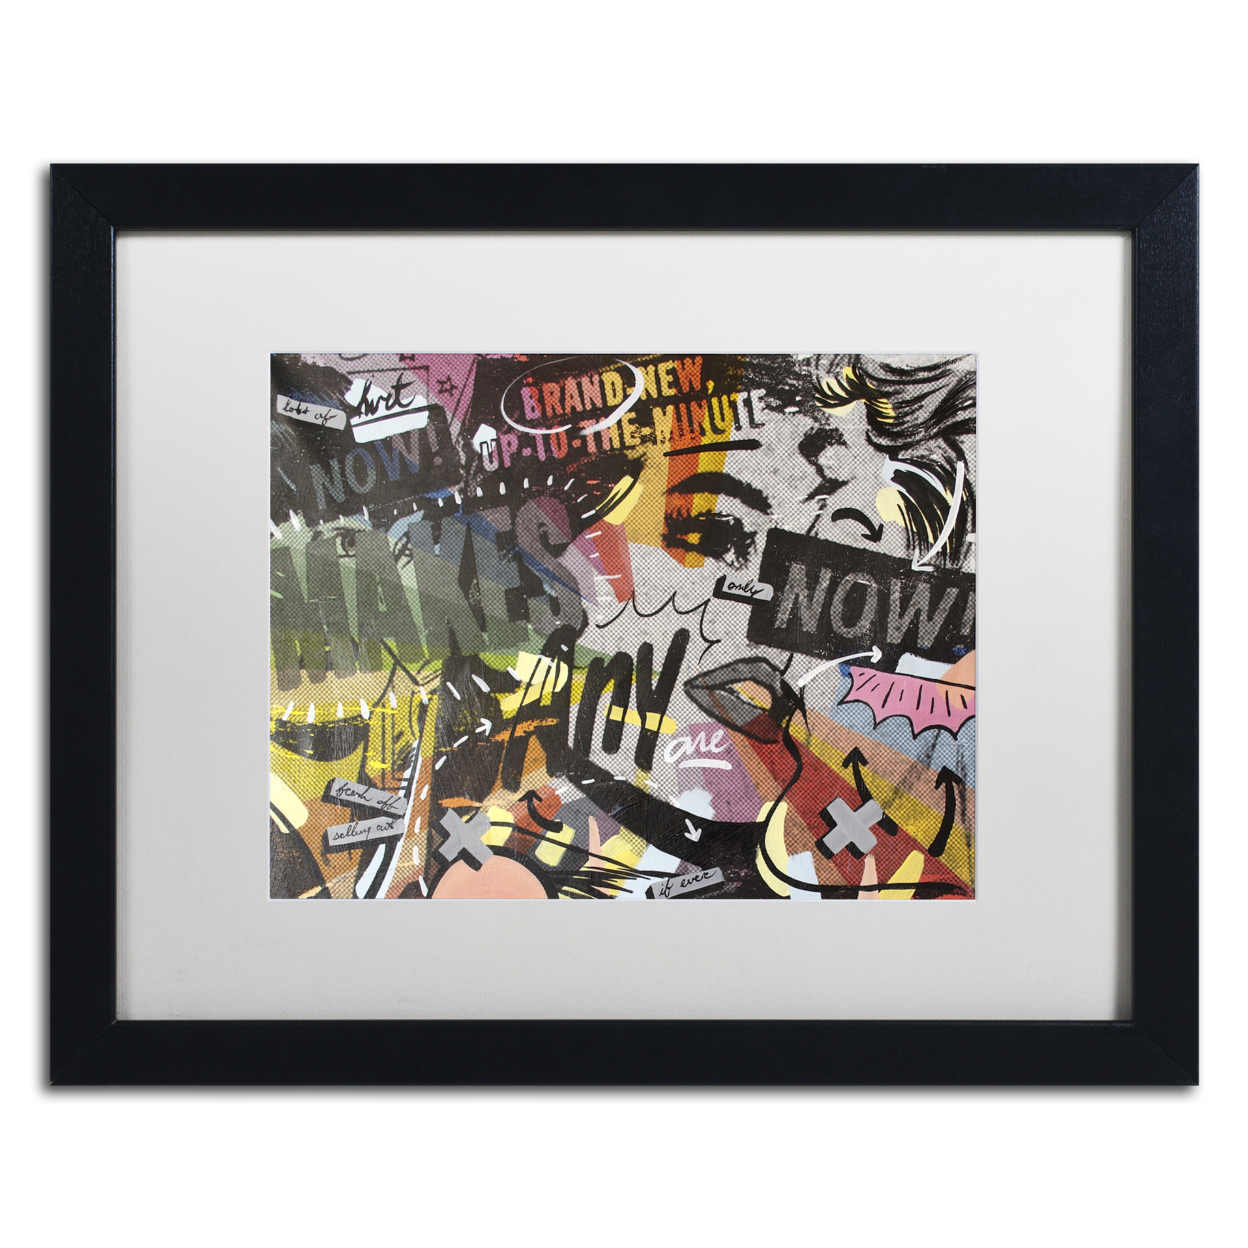 Dan Monteavaro 'Anyone Now' Black Wooden Framed Art 18 X 22 Inches